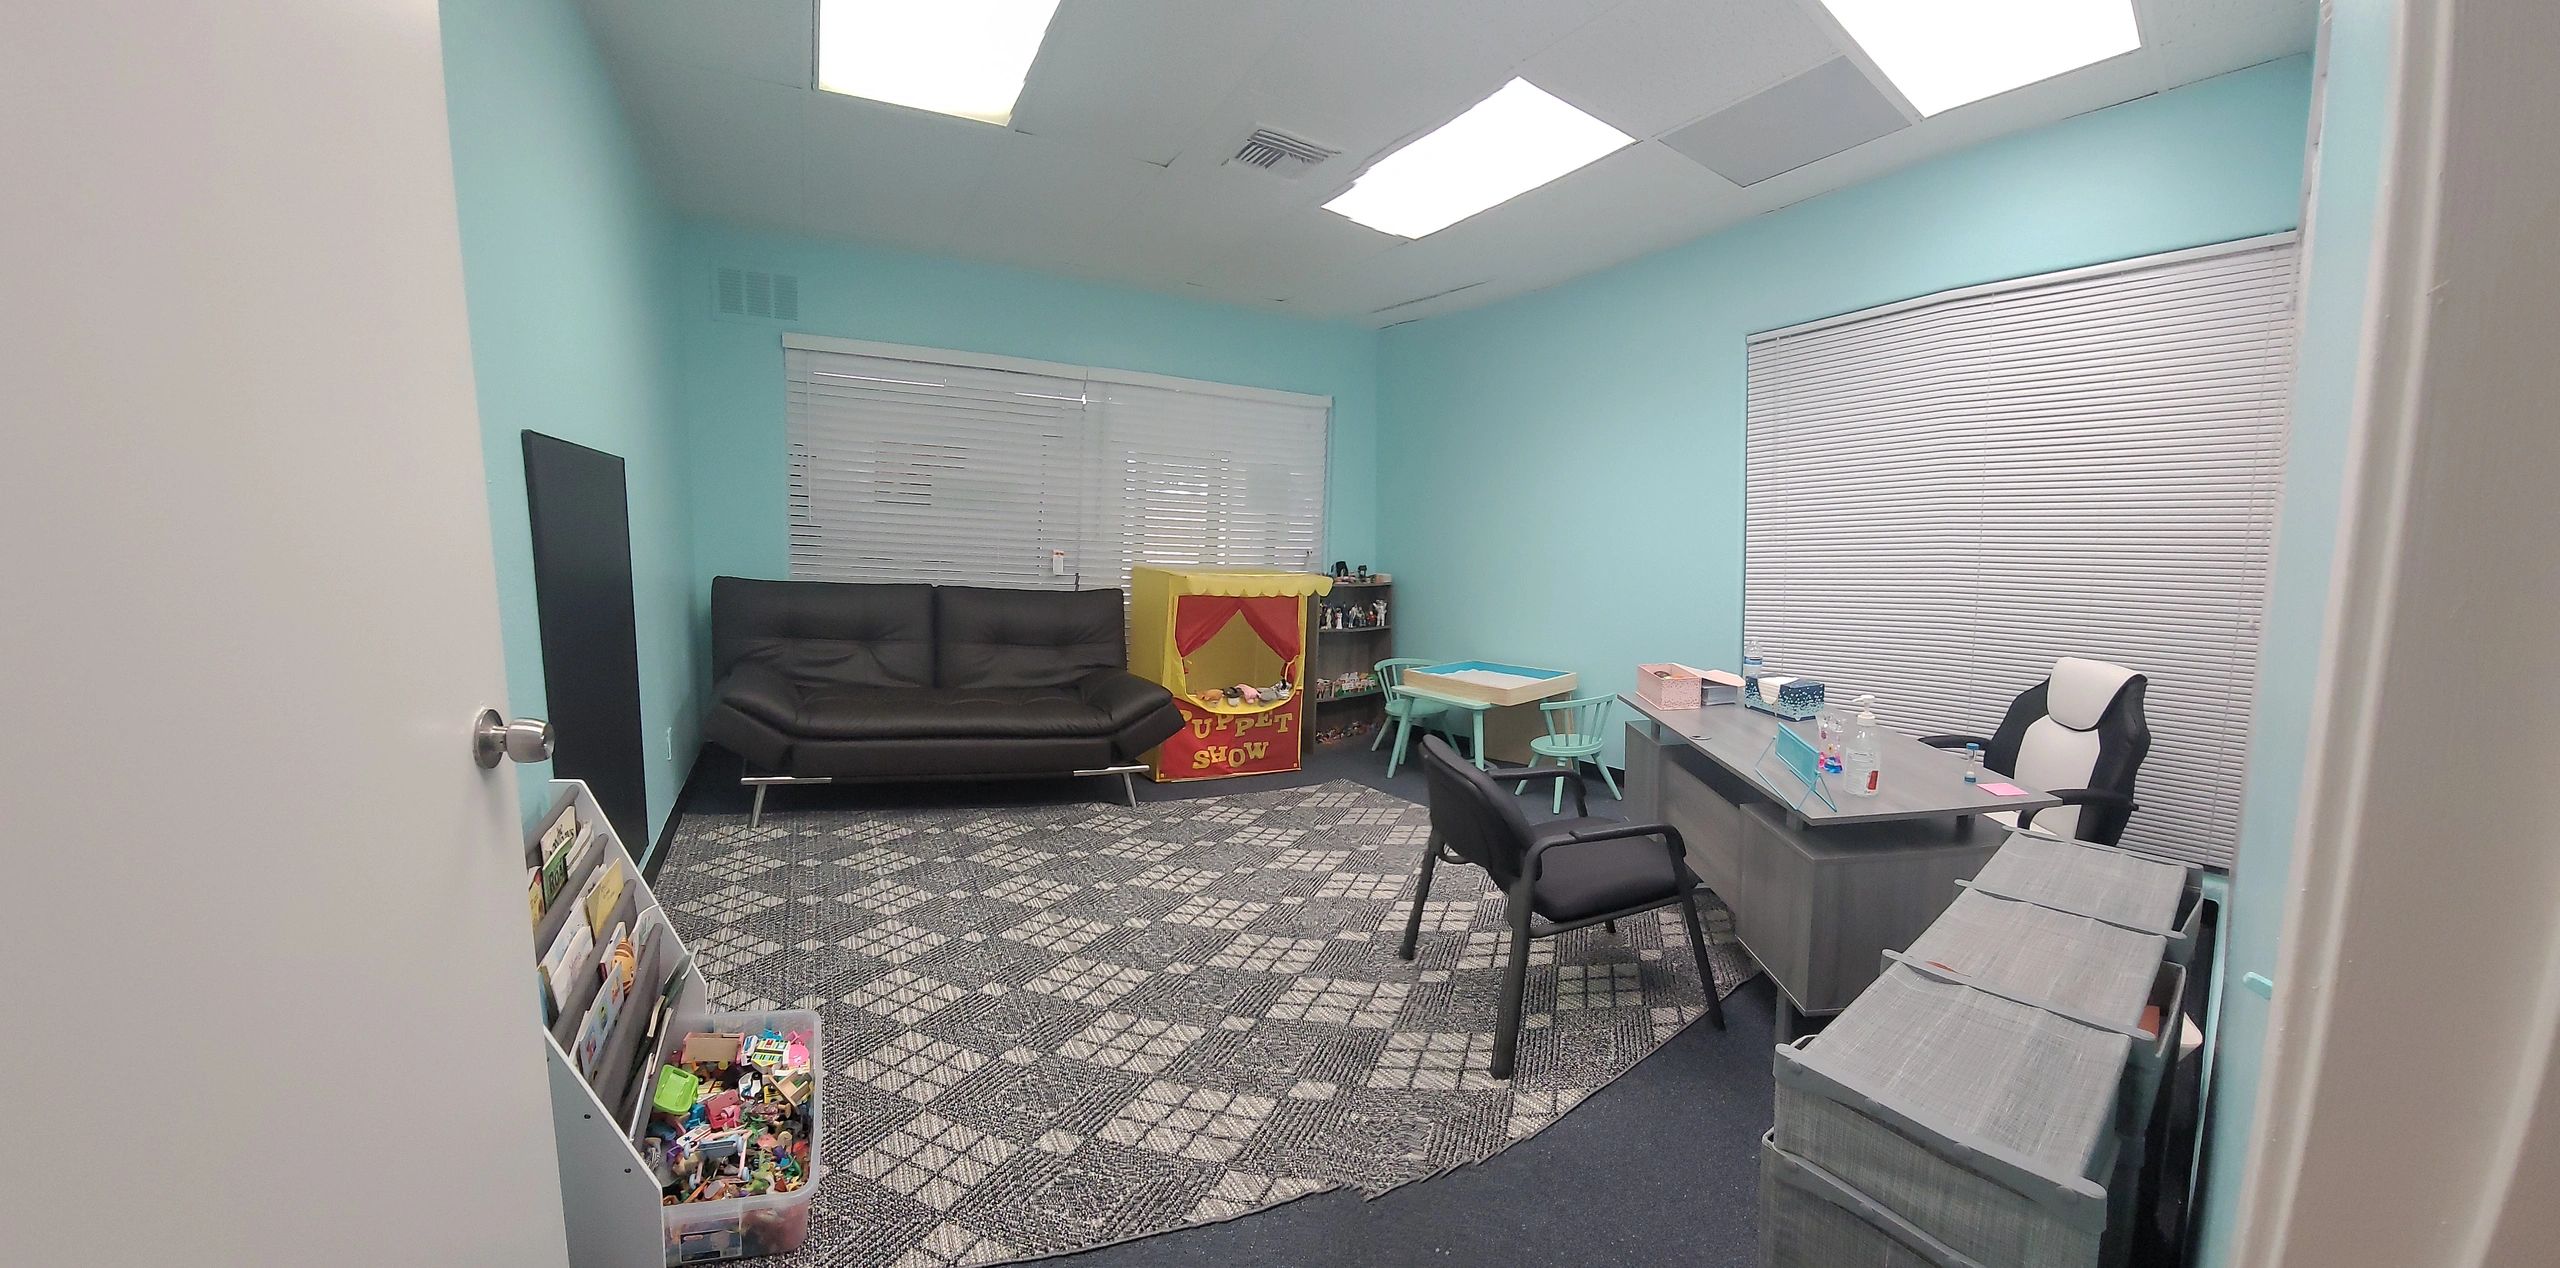 New Office child therapy in phoenix Arizona 